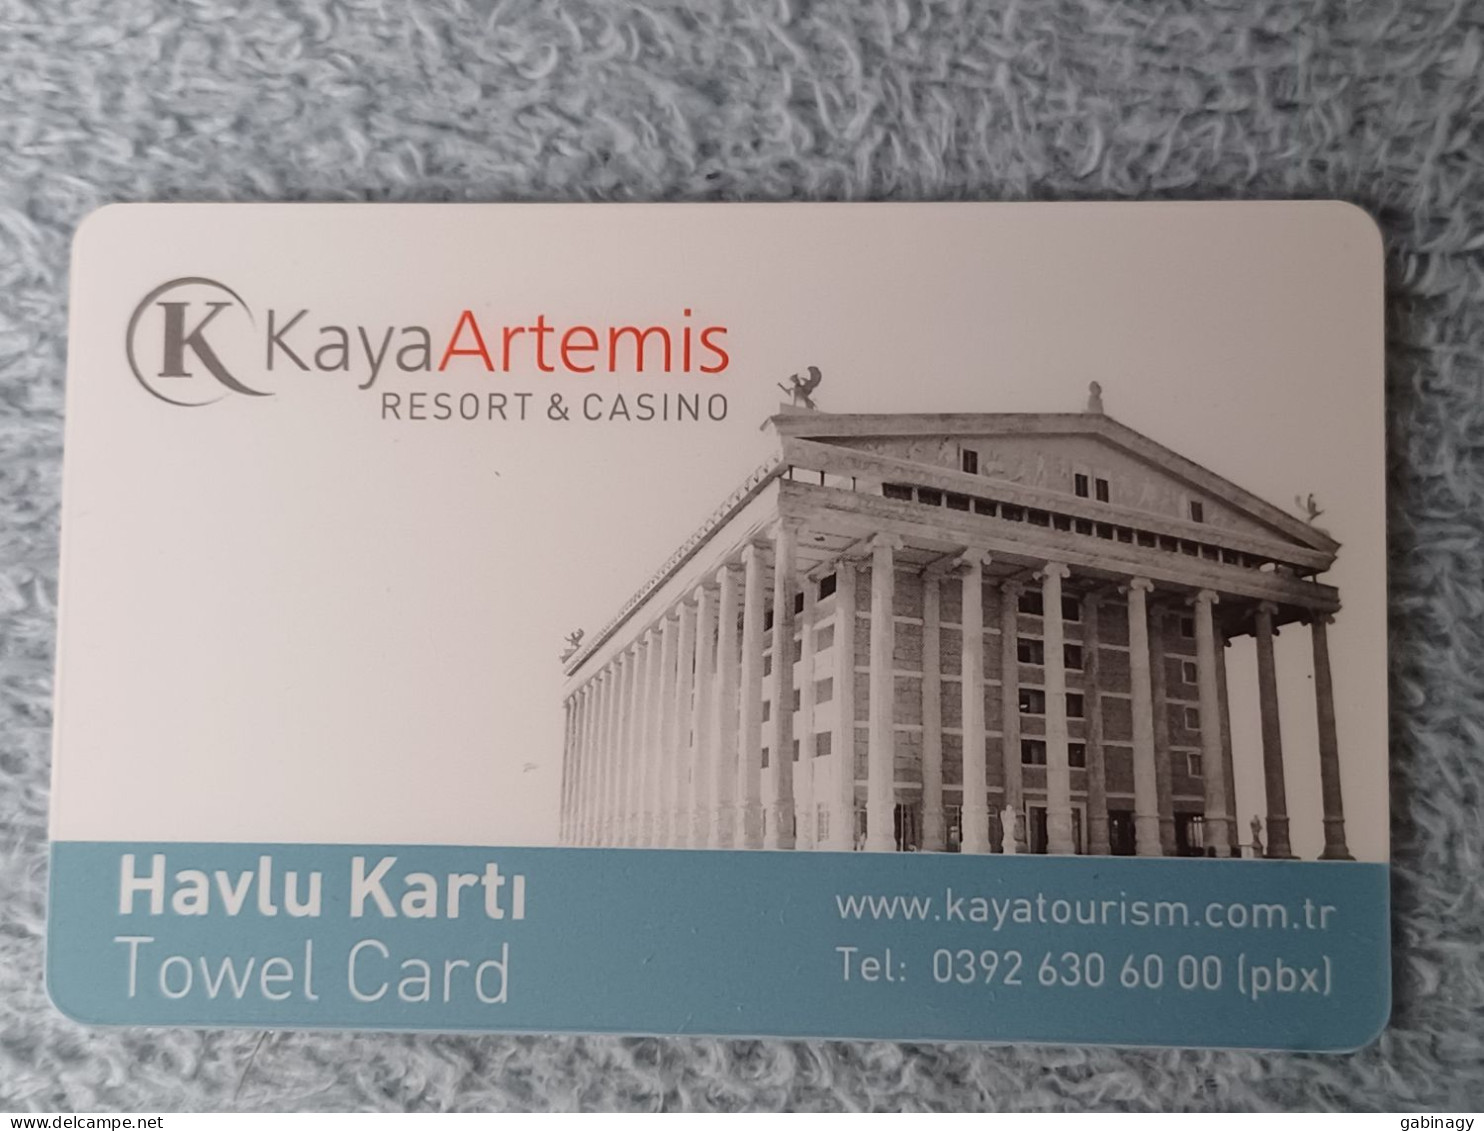 HOTEL KEYS - 2596 - TURKEY - KAYA ARTEMIS RESORT & CASINO - Cartes D'hotel